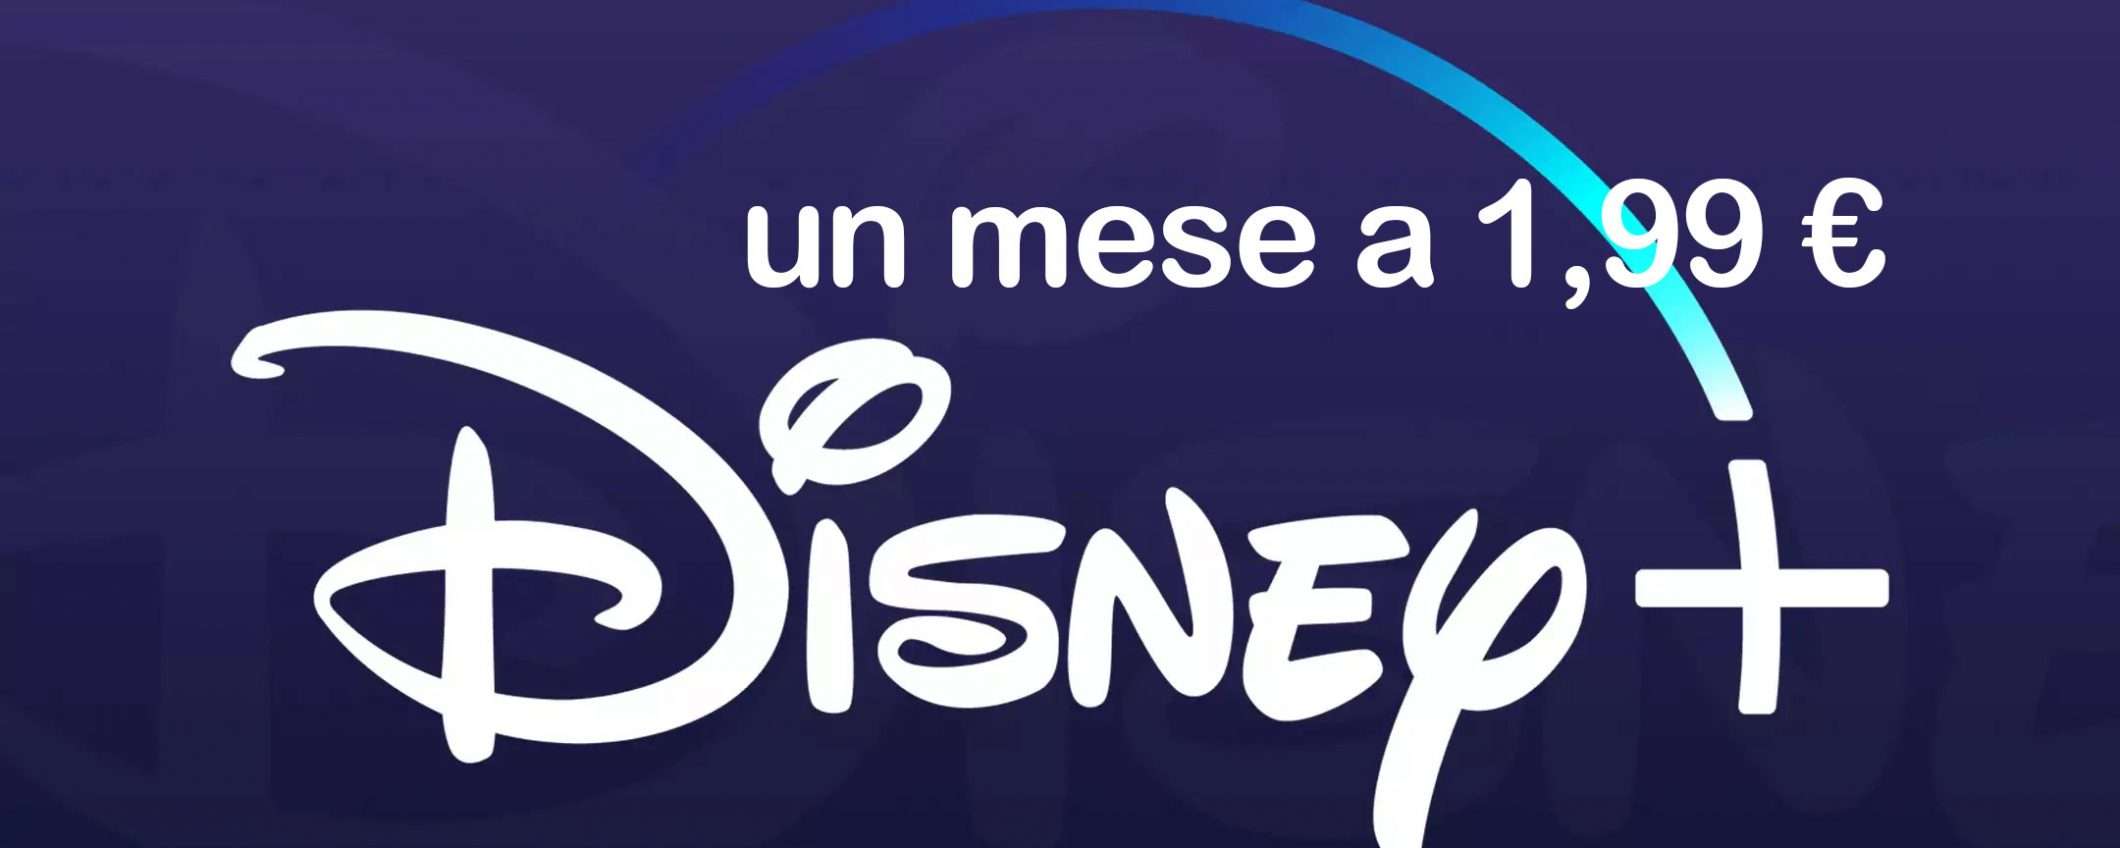 Disney+, un mese di streaming a 1,99 €: ecco come